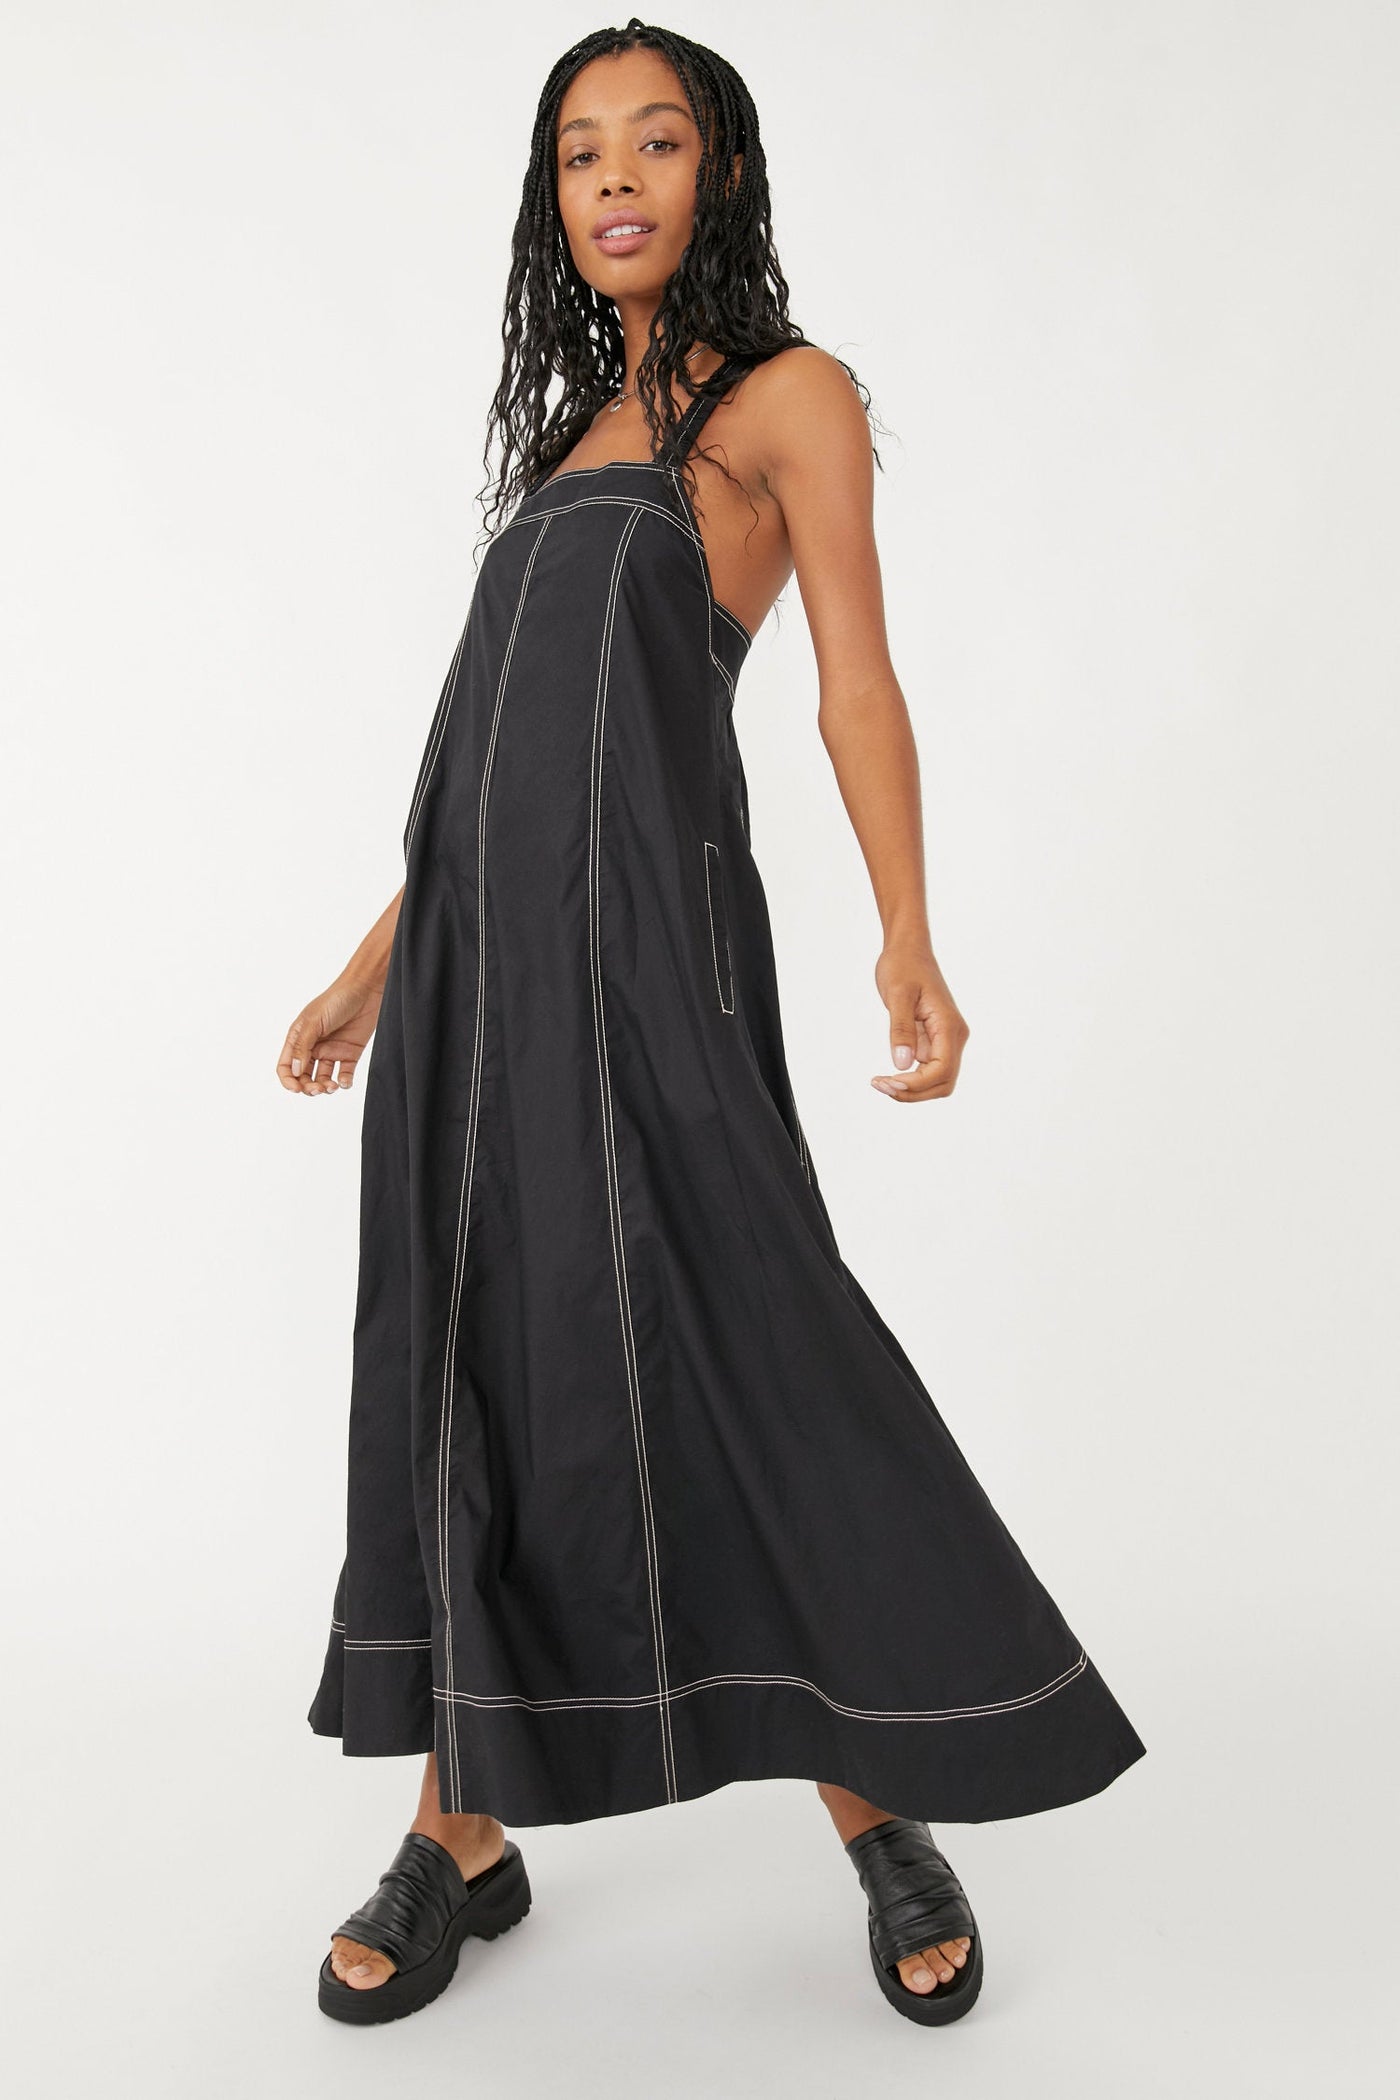 Desert Hearts Apron Dress, in Black (6704640426046)